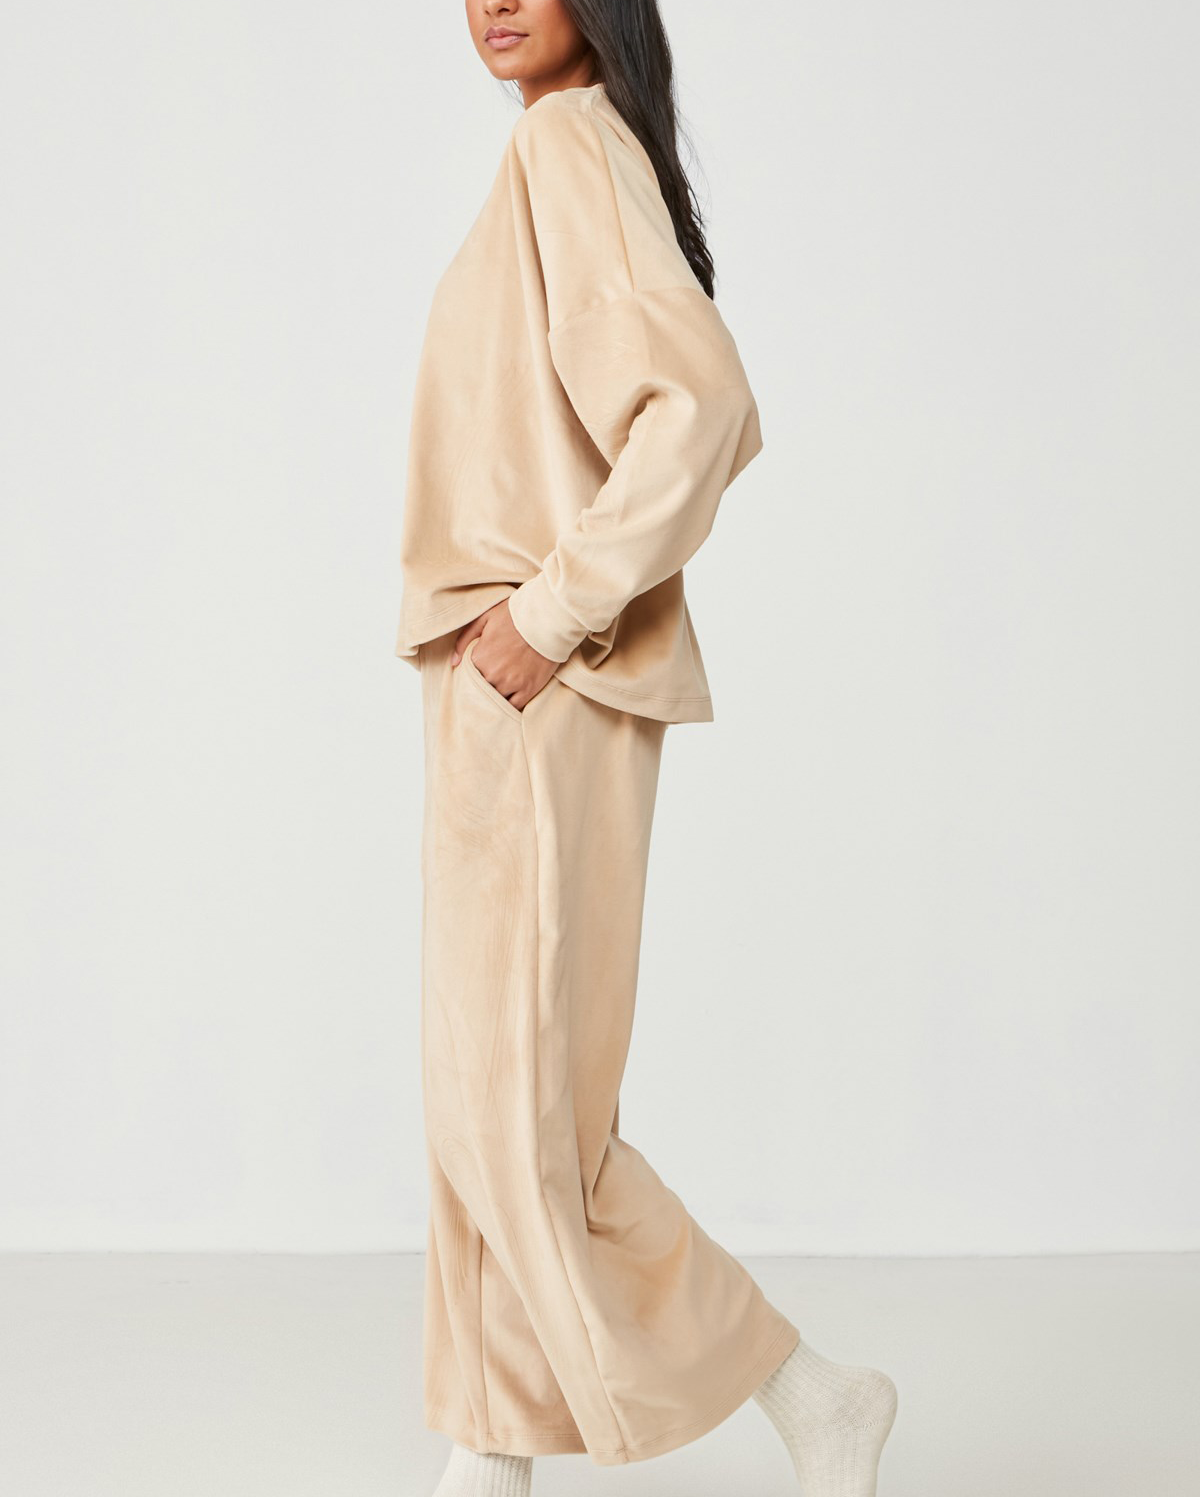 Long Sleeve Velvet Pyjama Set - Beige